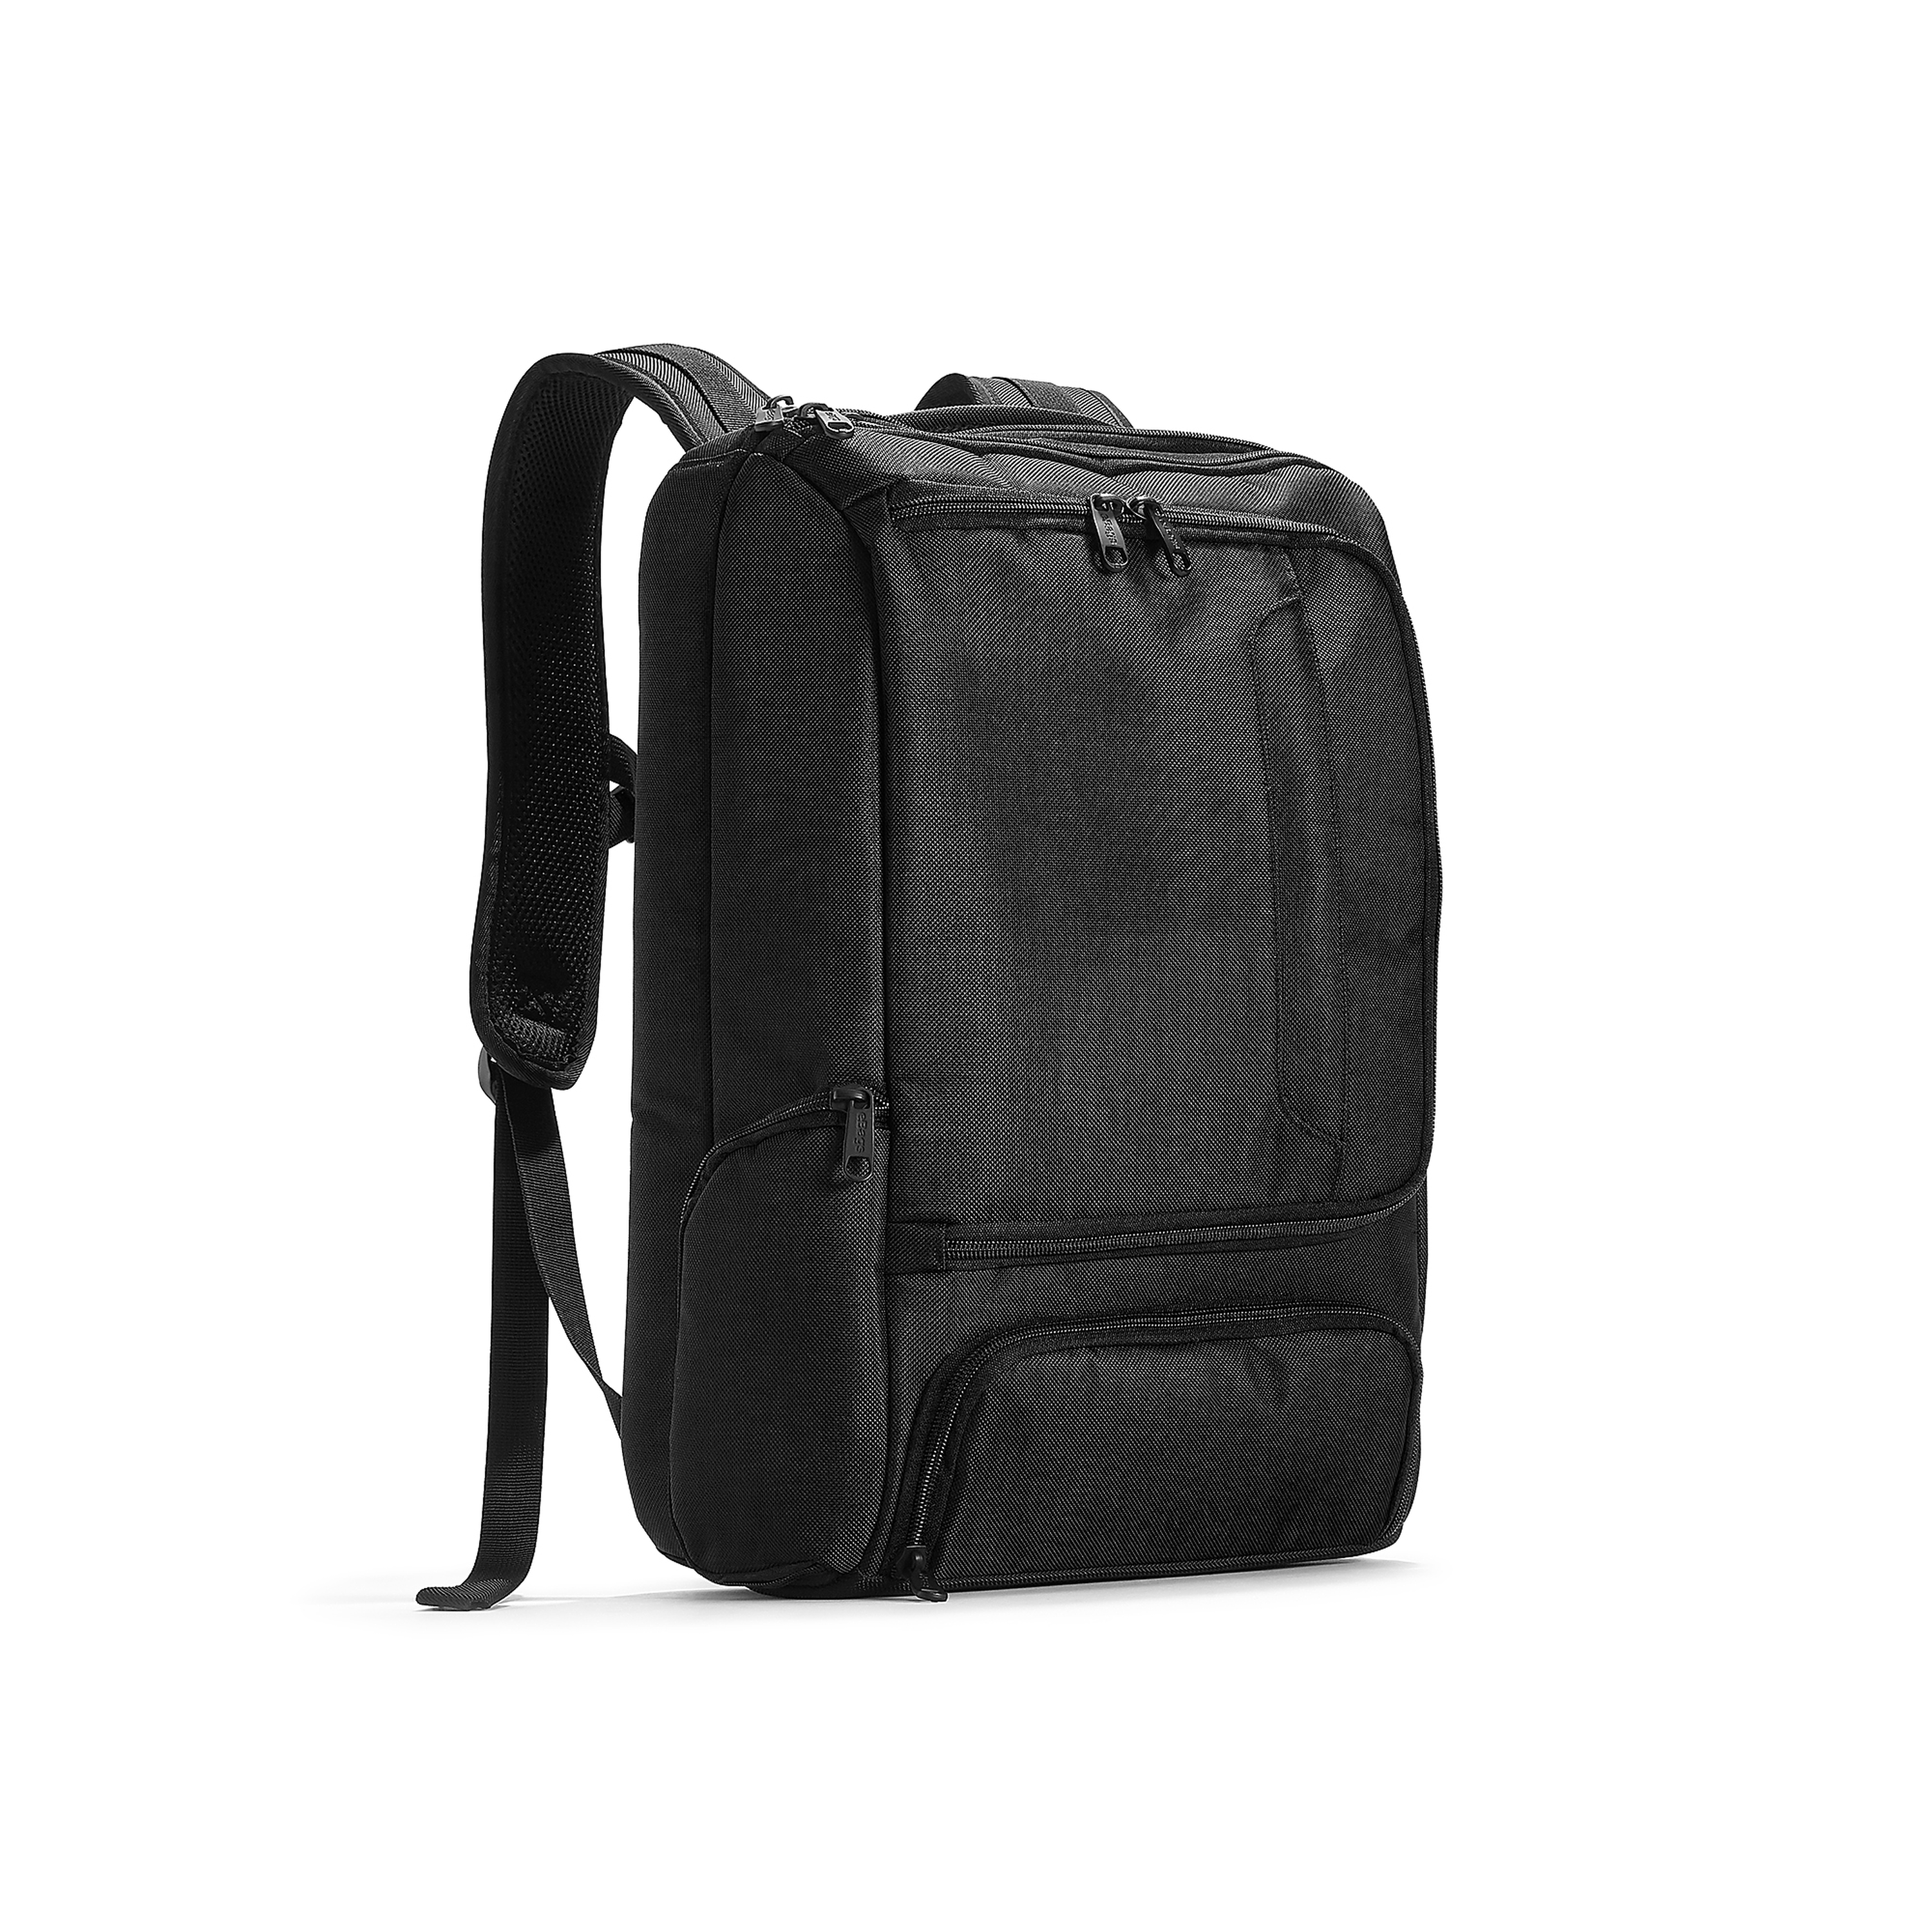 louisville backpack for men